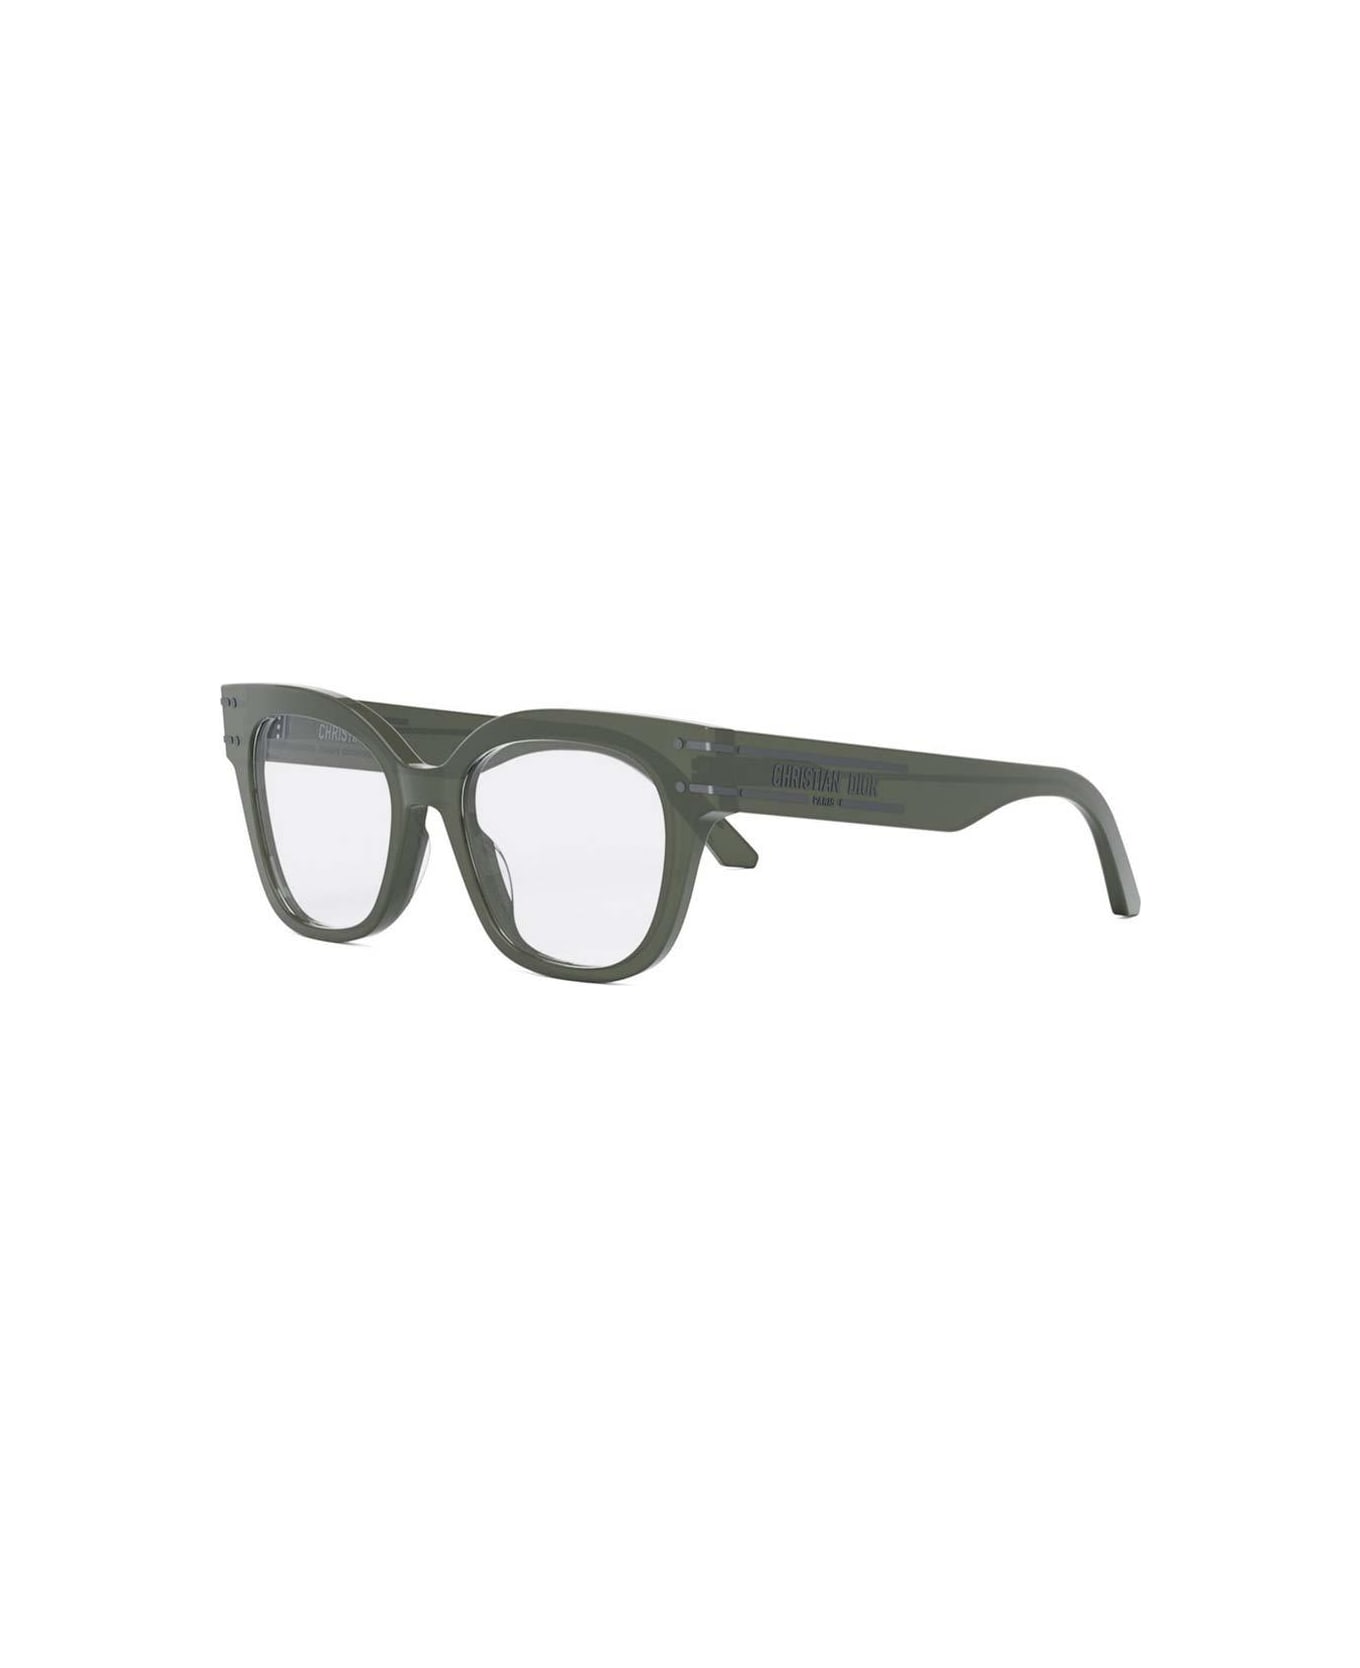 Dior Eyewear Round Frame Glasses - 5500 アイウェア